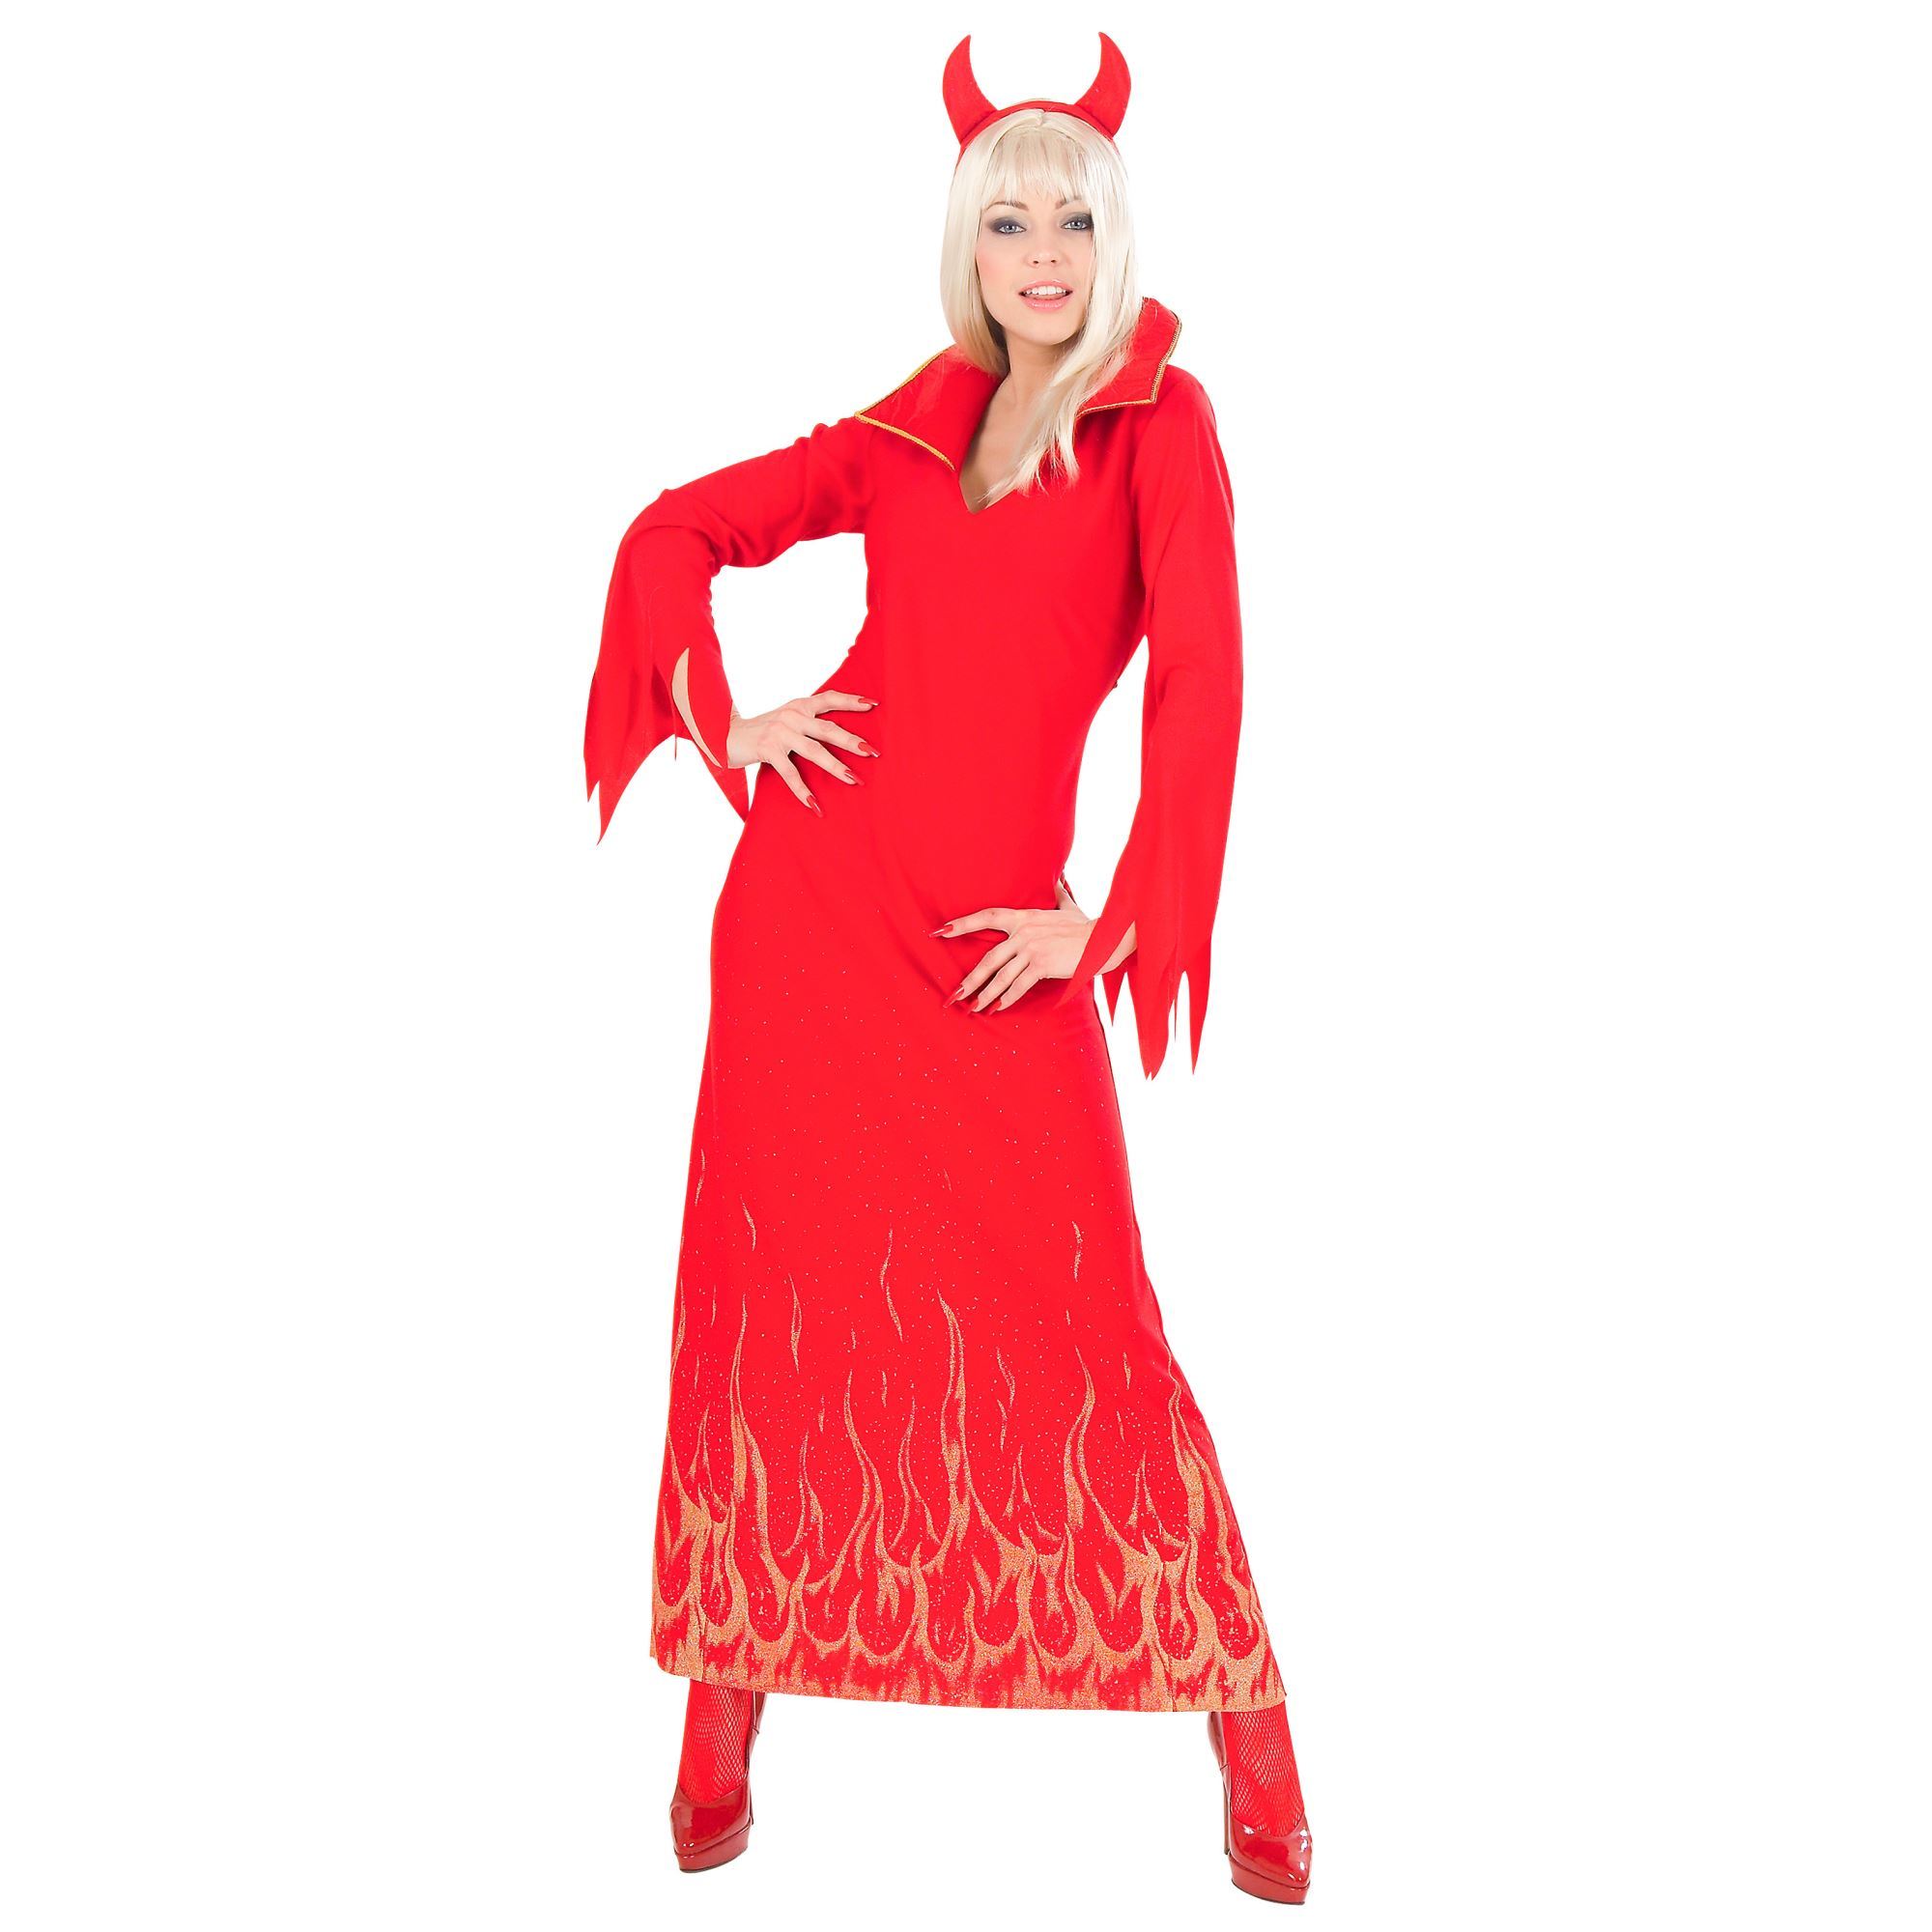 sprankelend duivels dames kostuum